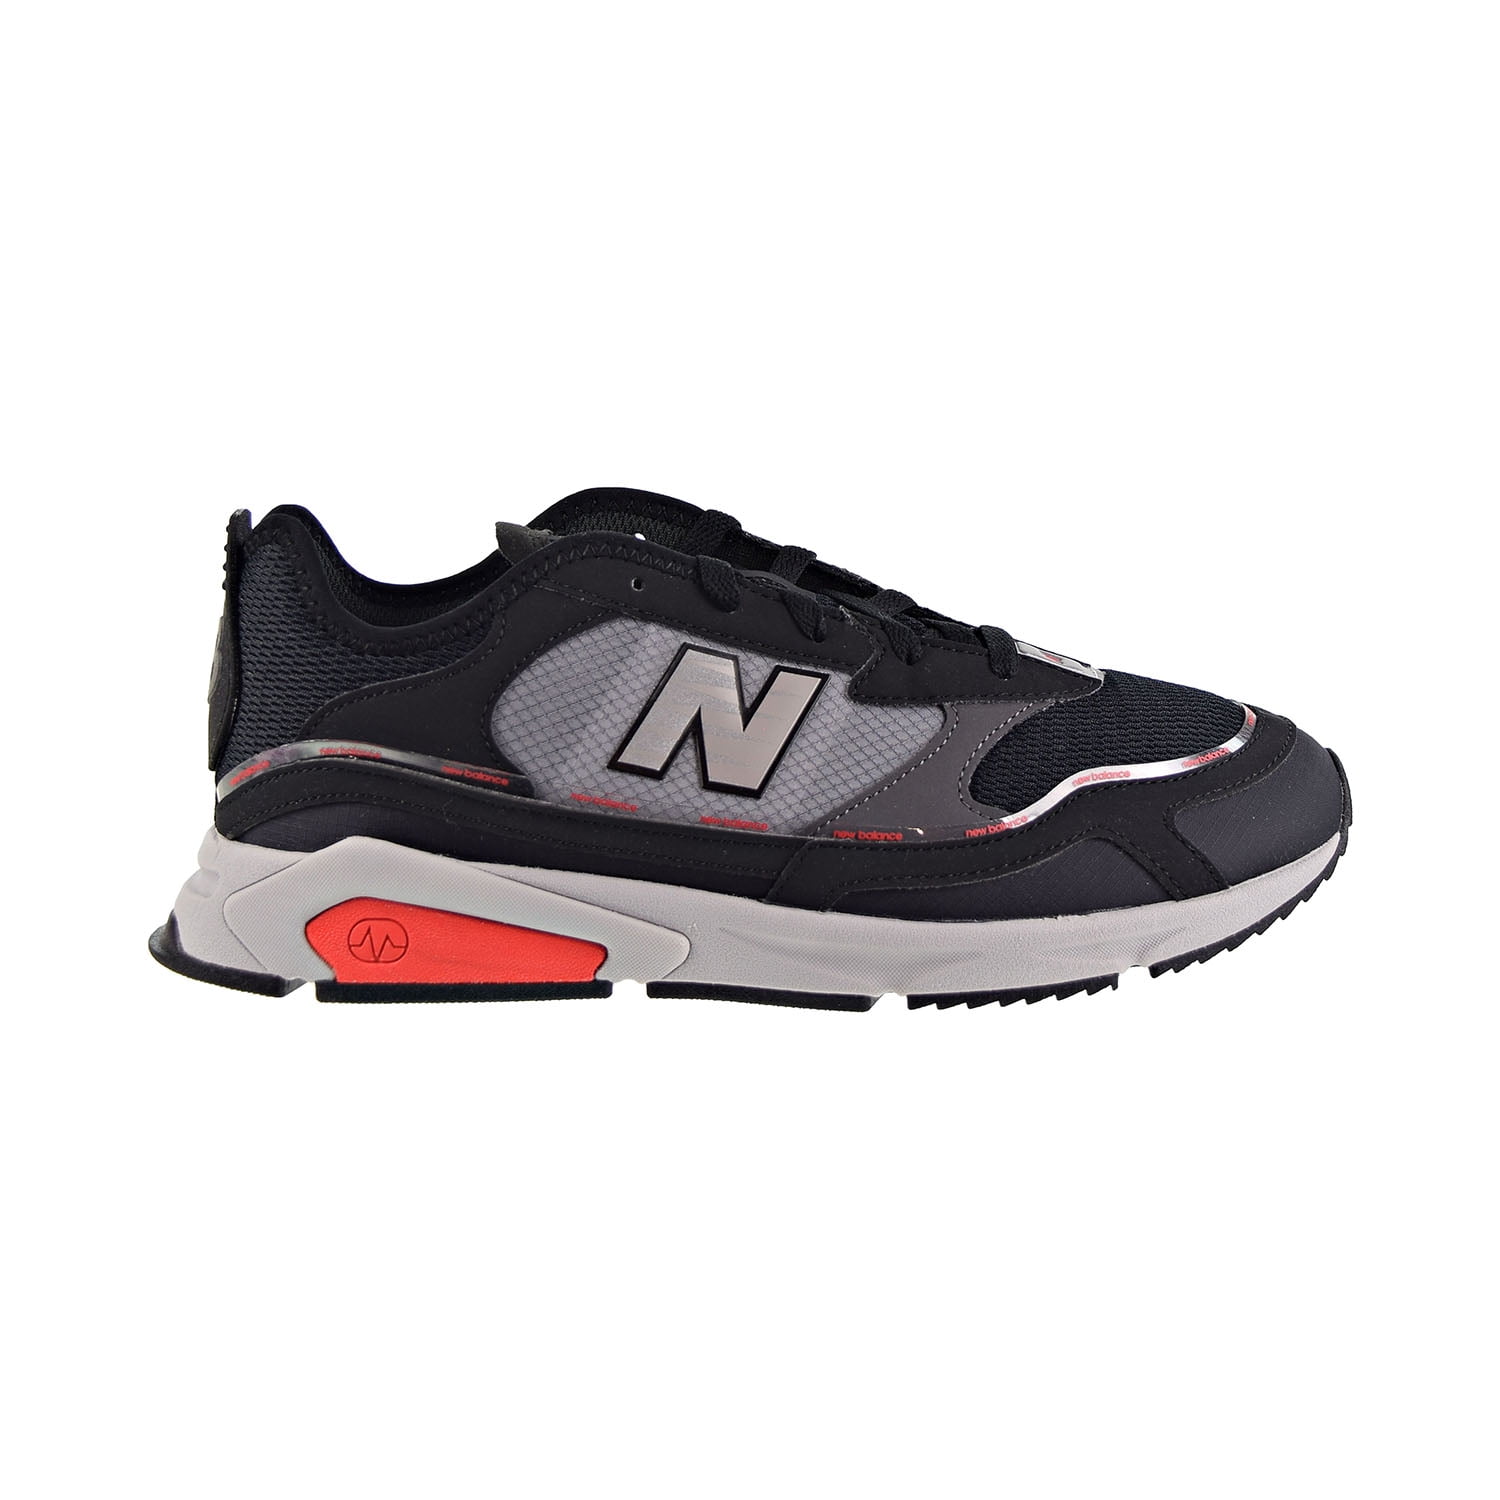 New Balance - New Balance X-Racer Men's Shoes Black/Velocity Red msxrc-htw - Walmart.com